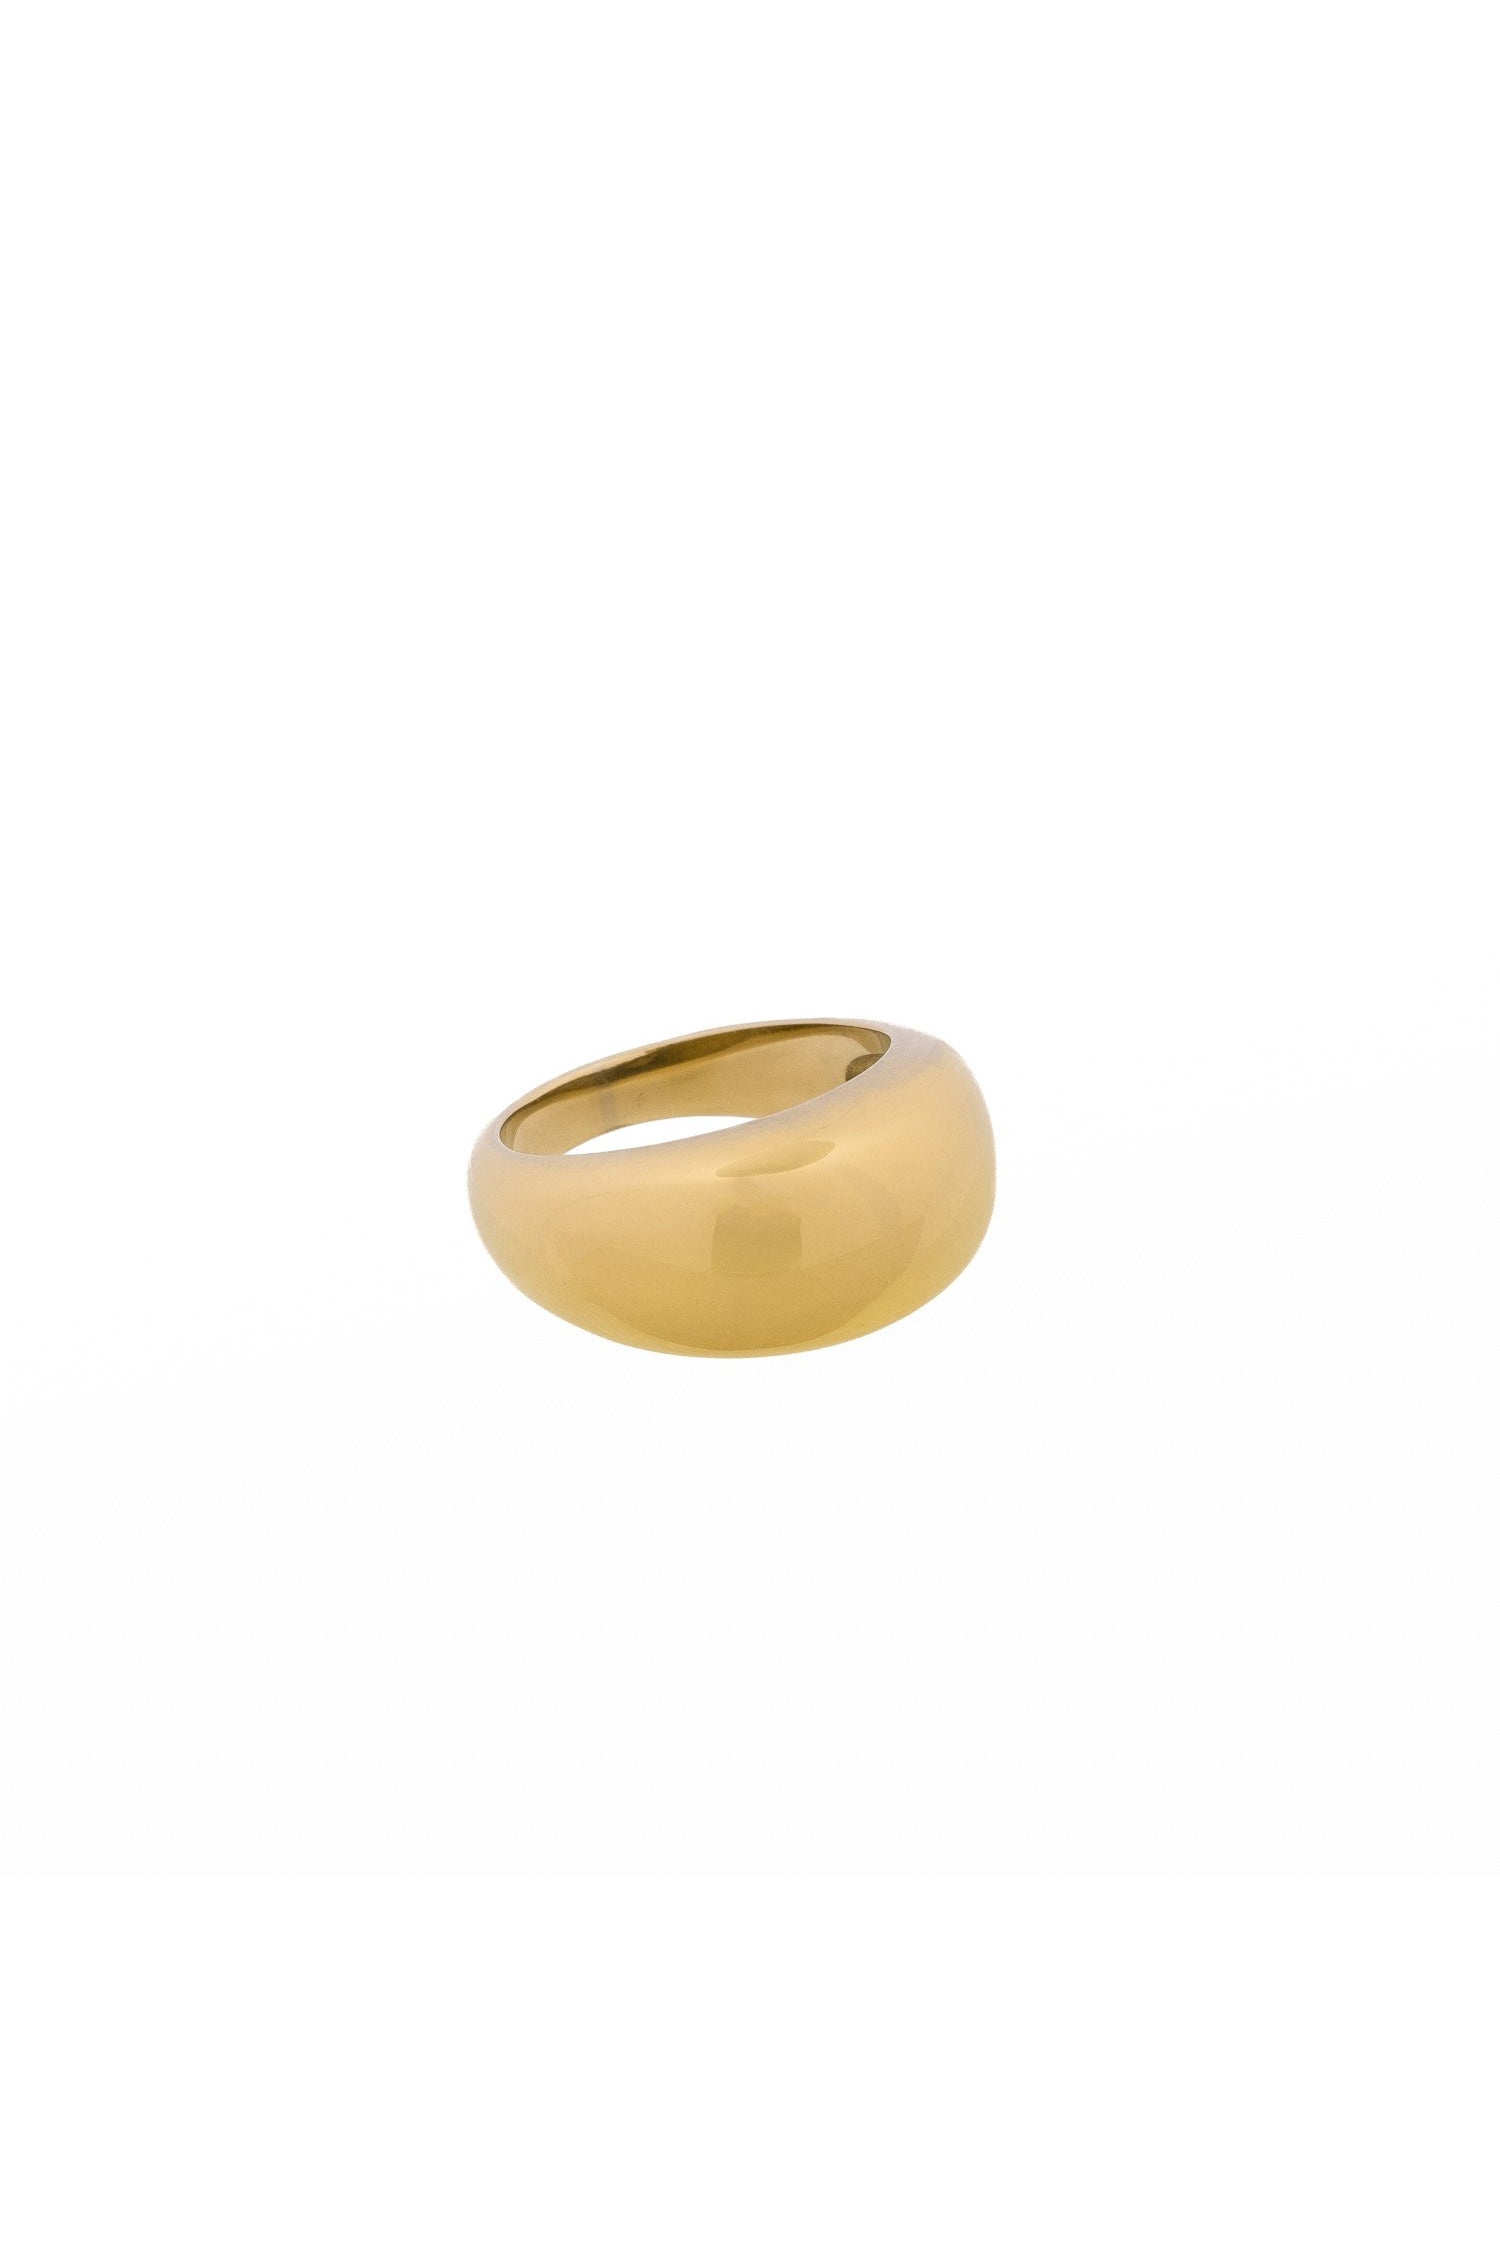 Bandhu Bouble Ring - Gold - RUM Amsterdam